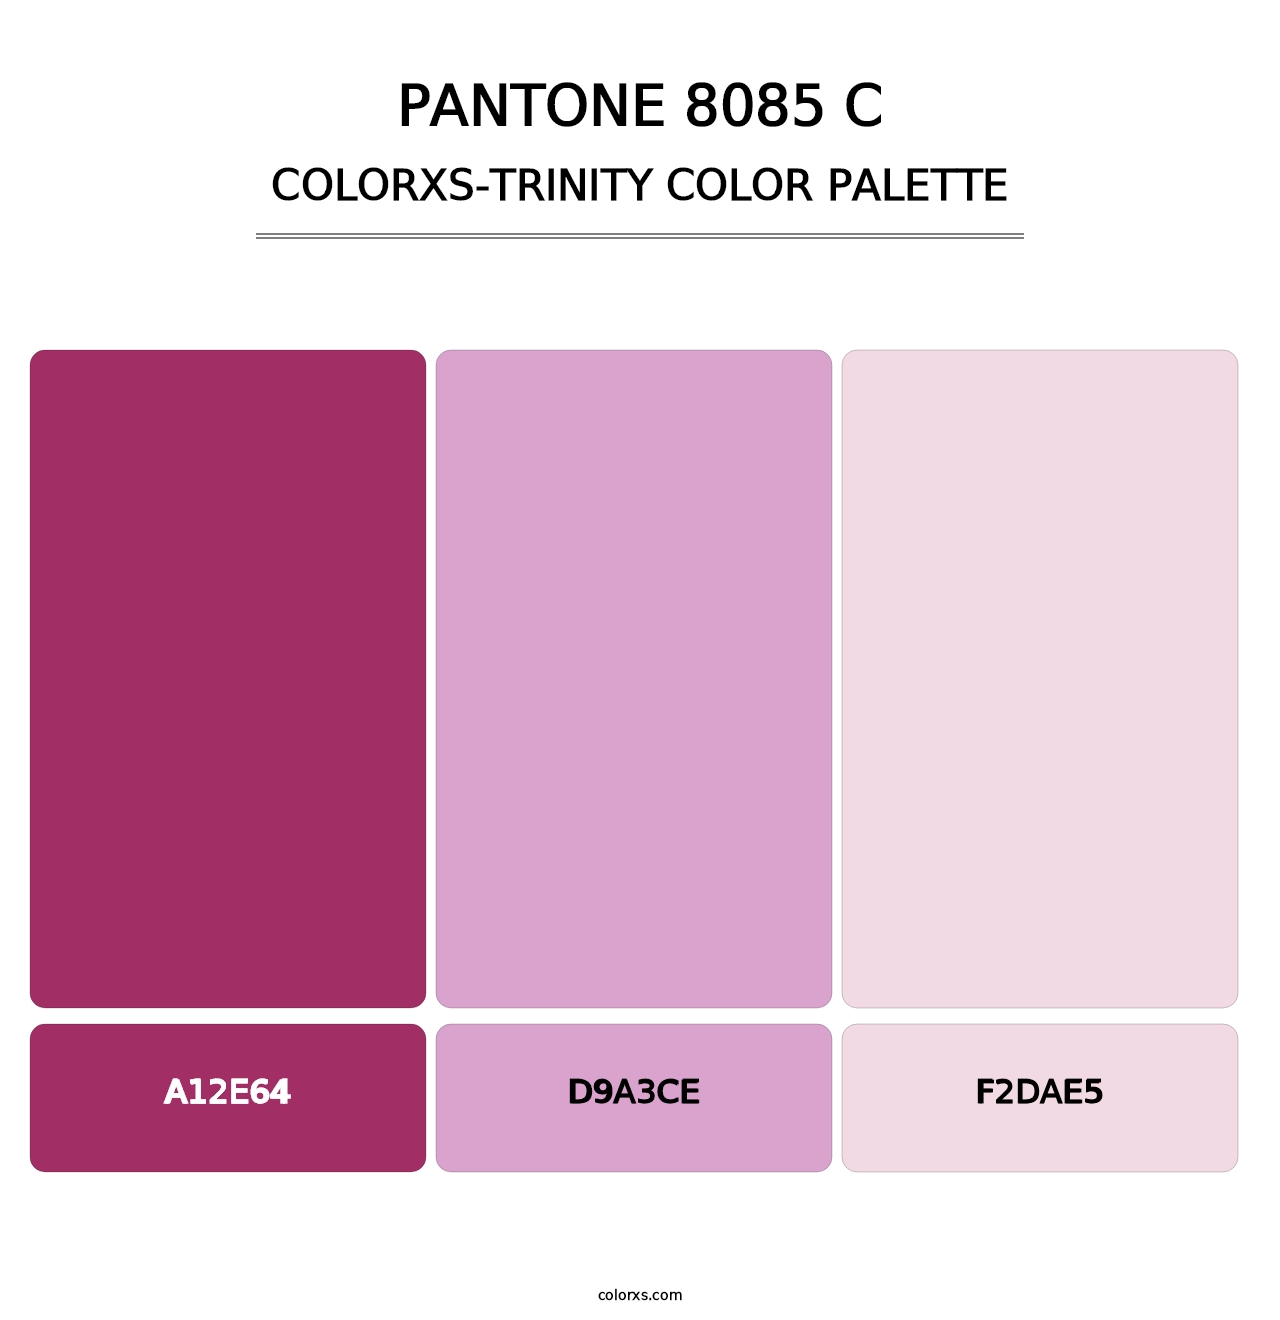 PANTONE 8085 C - Colorxs Trinity Palette